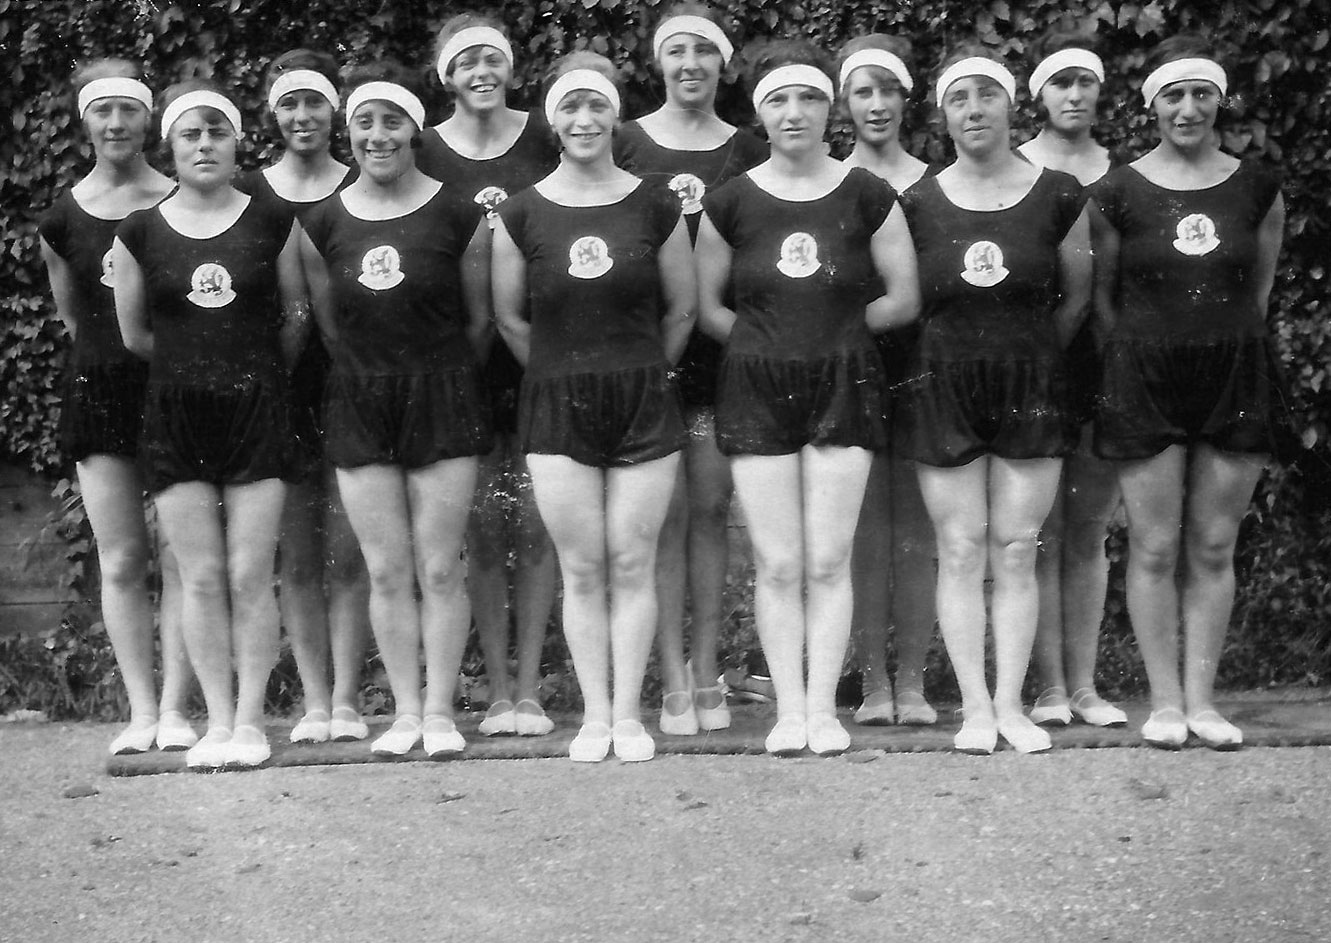 The Dutch Olympic women's gymnastics team at the Amsterdam Olympics, 1928